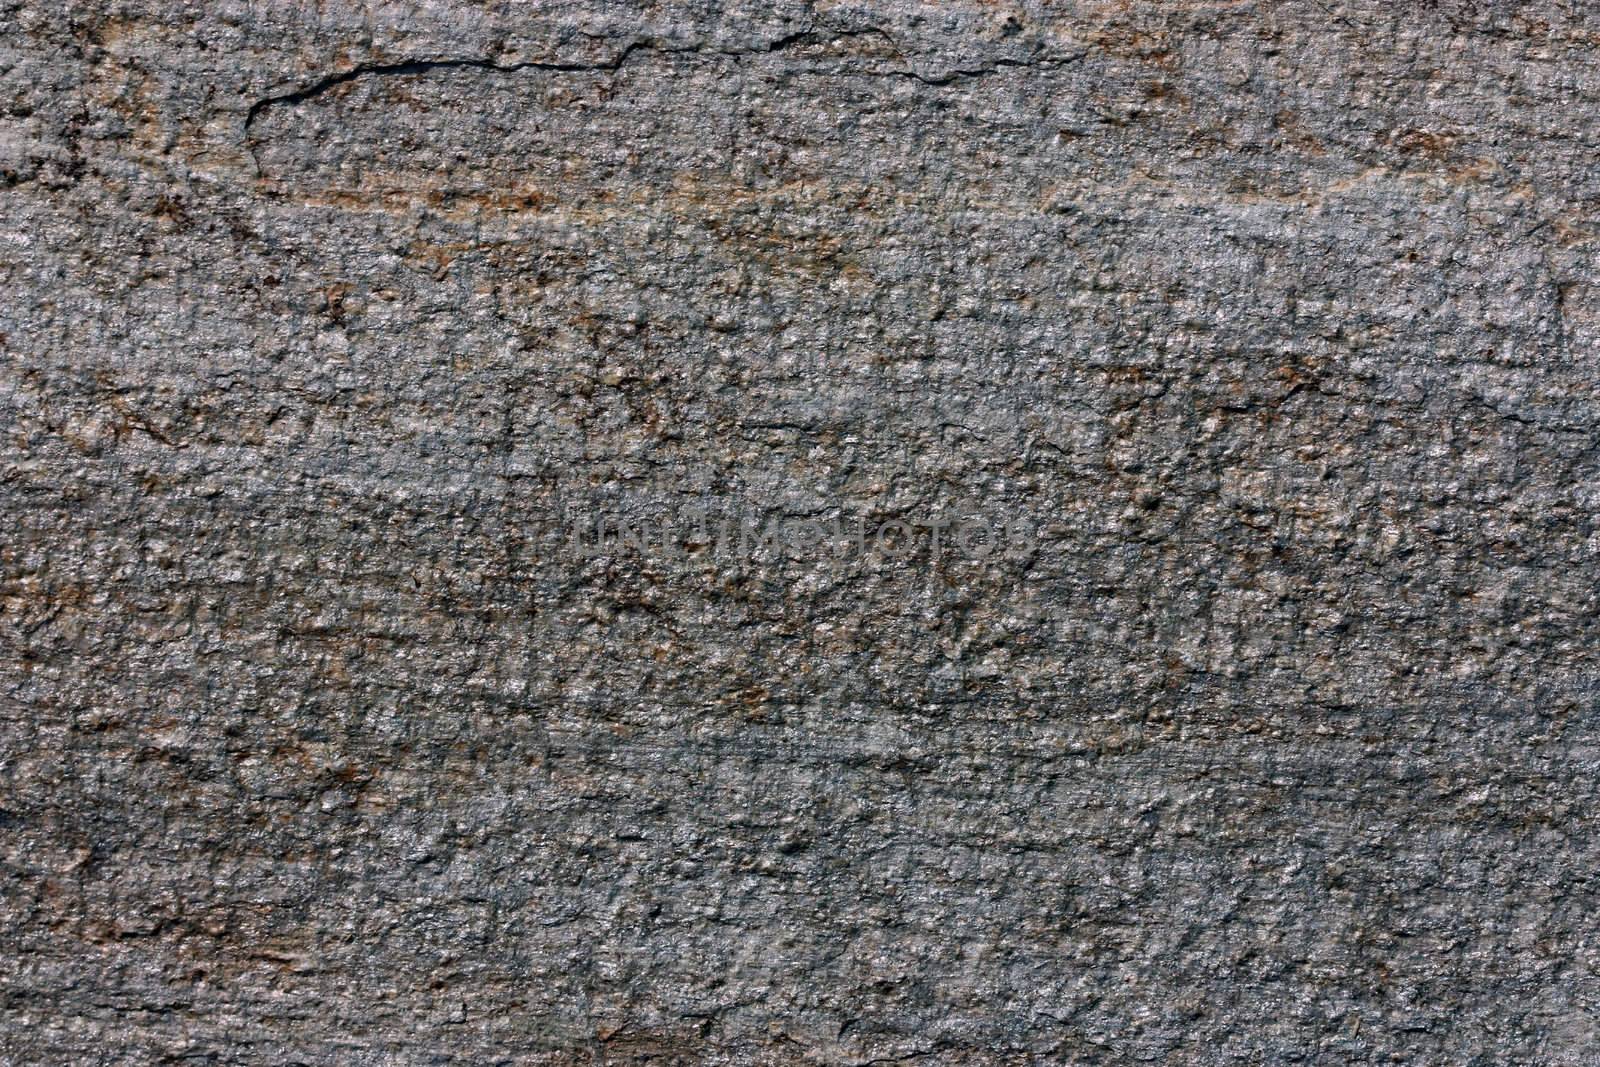 Dark texture of natural stone